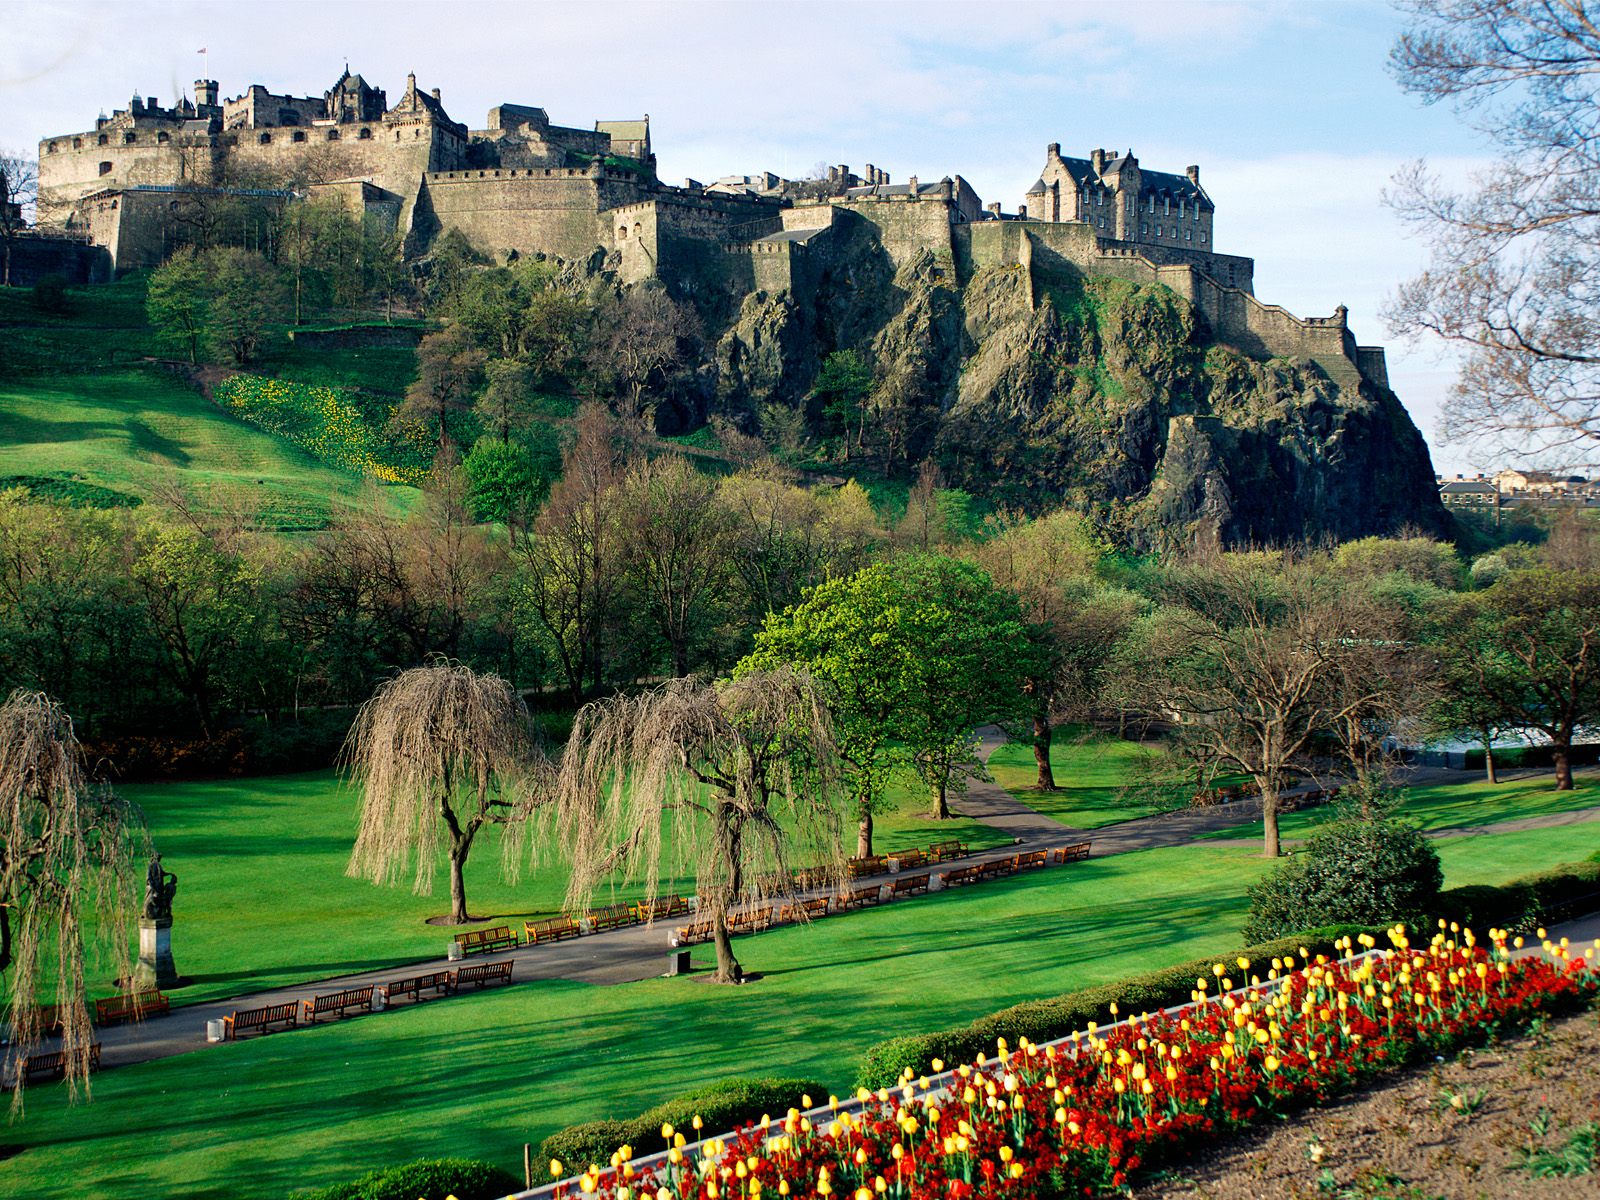 http://3.bp.blogspot.com/-GFtLMd6gBTw/T2zb-ysILnI/AAAAAAAAOQQ/UcTV1TdW3zw/s1600/wonderful-Edinburgh-Castle-Scotland.jpg